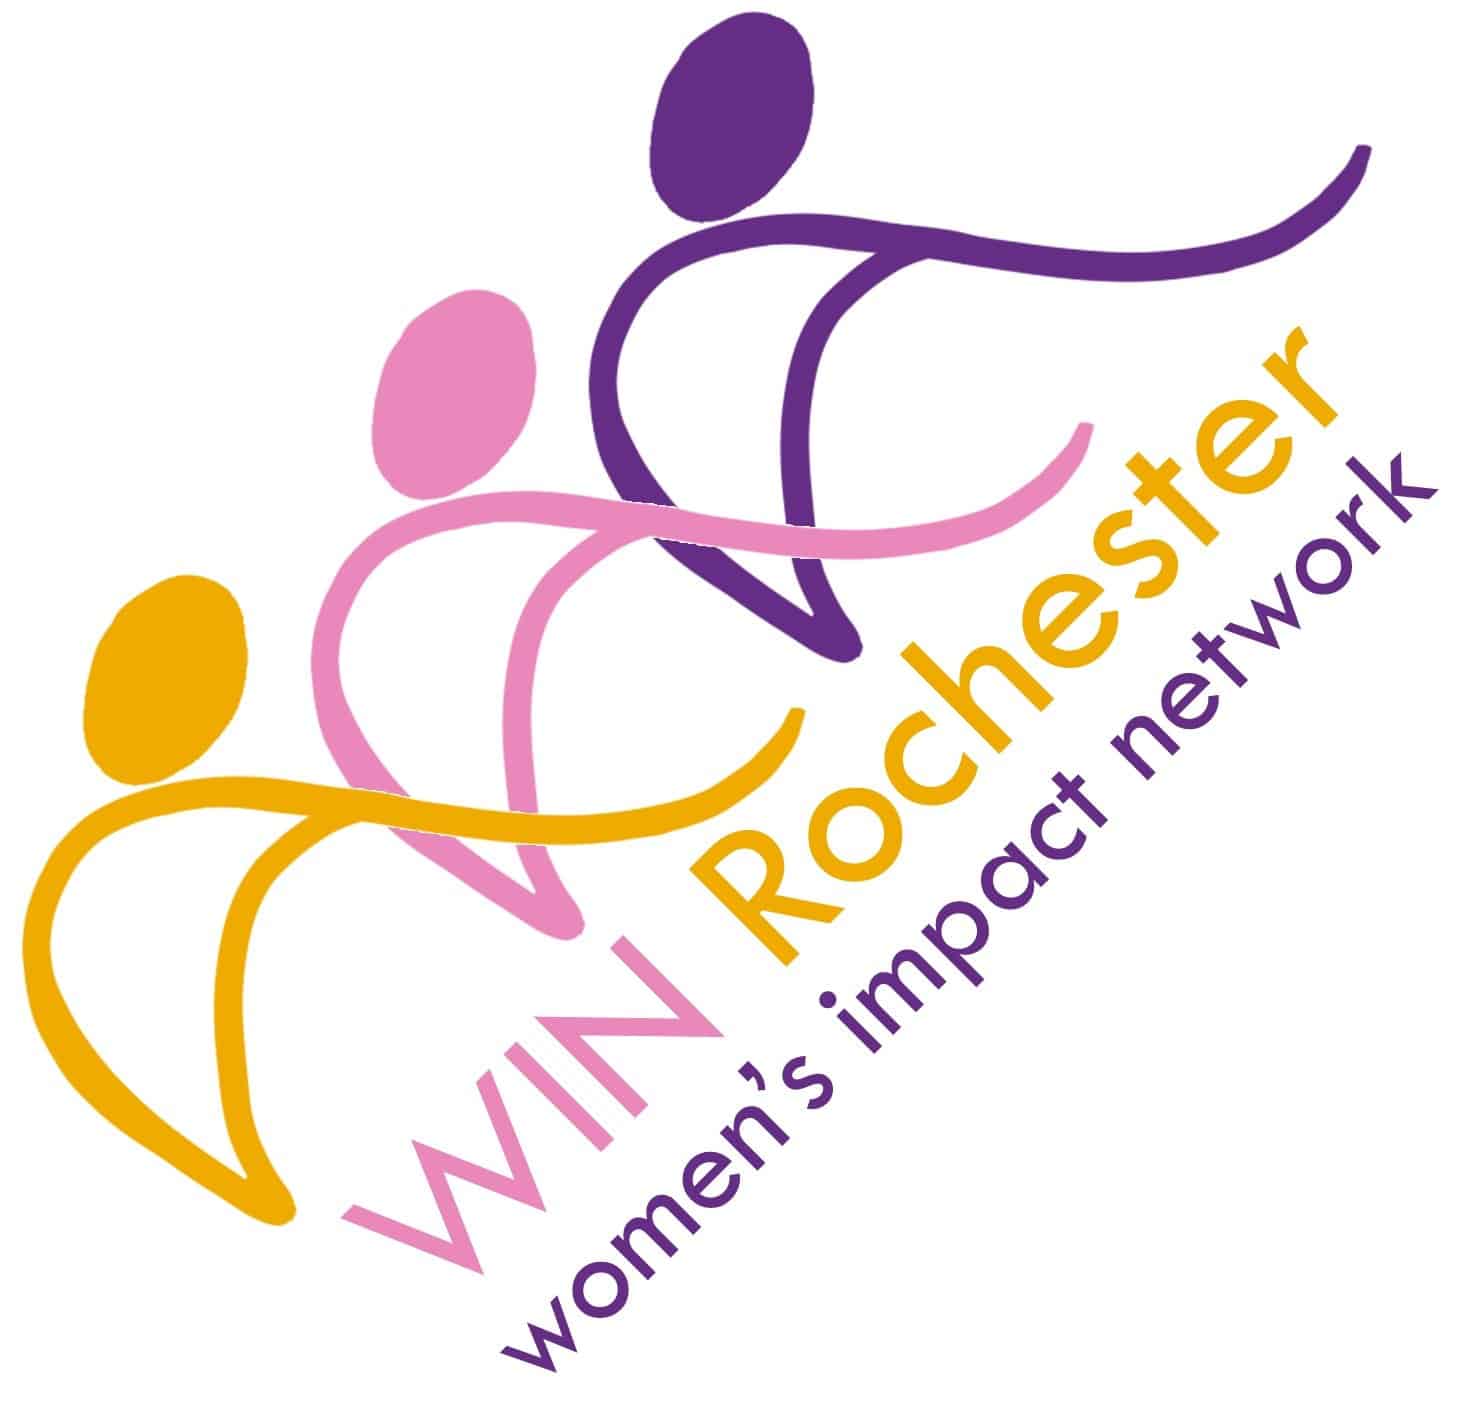 3/10 Women's Impact Network (WIN) ROC, Networking Event